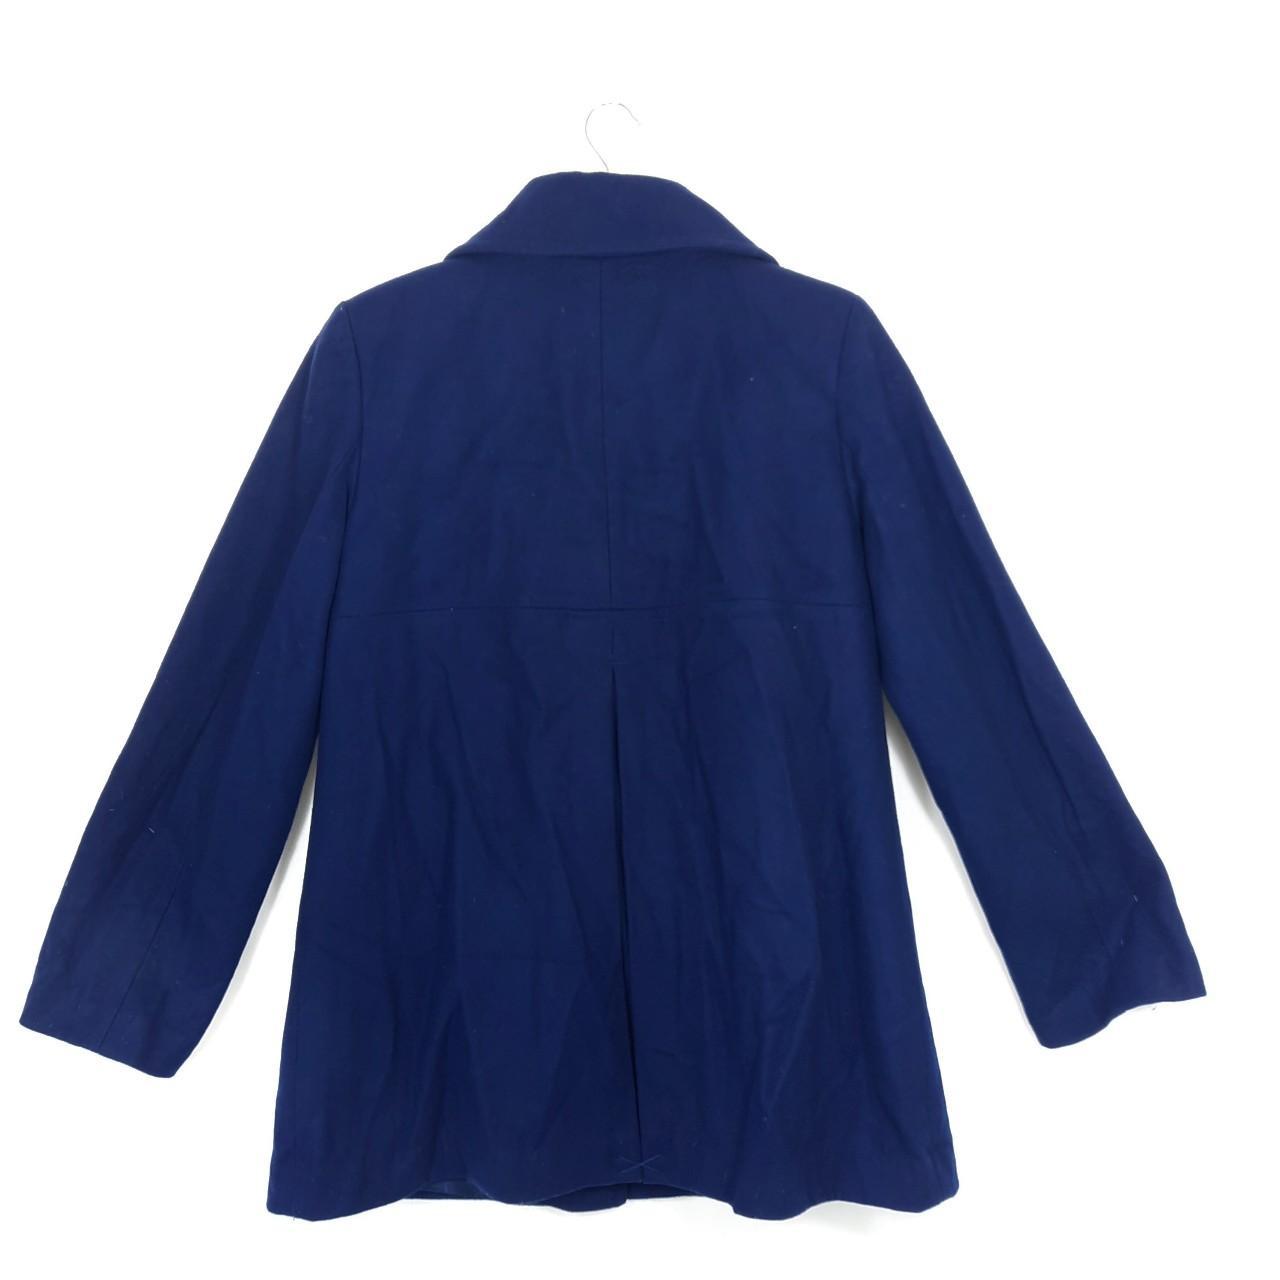 Warm blue winter / autumn jacket Size 12 Medium